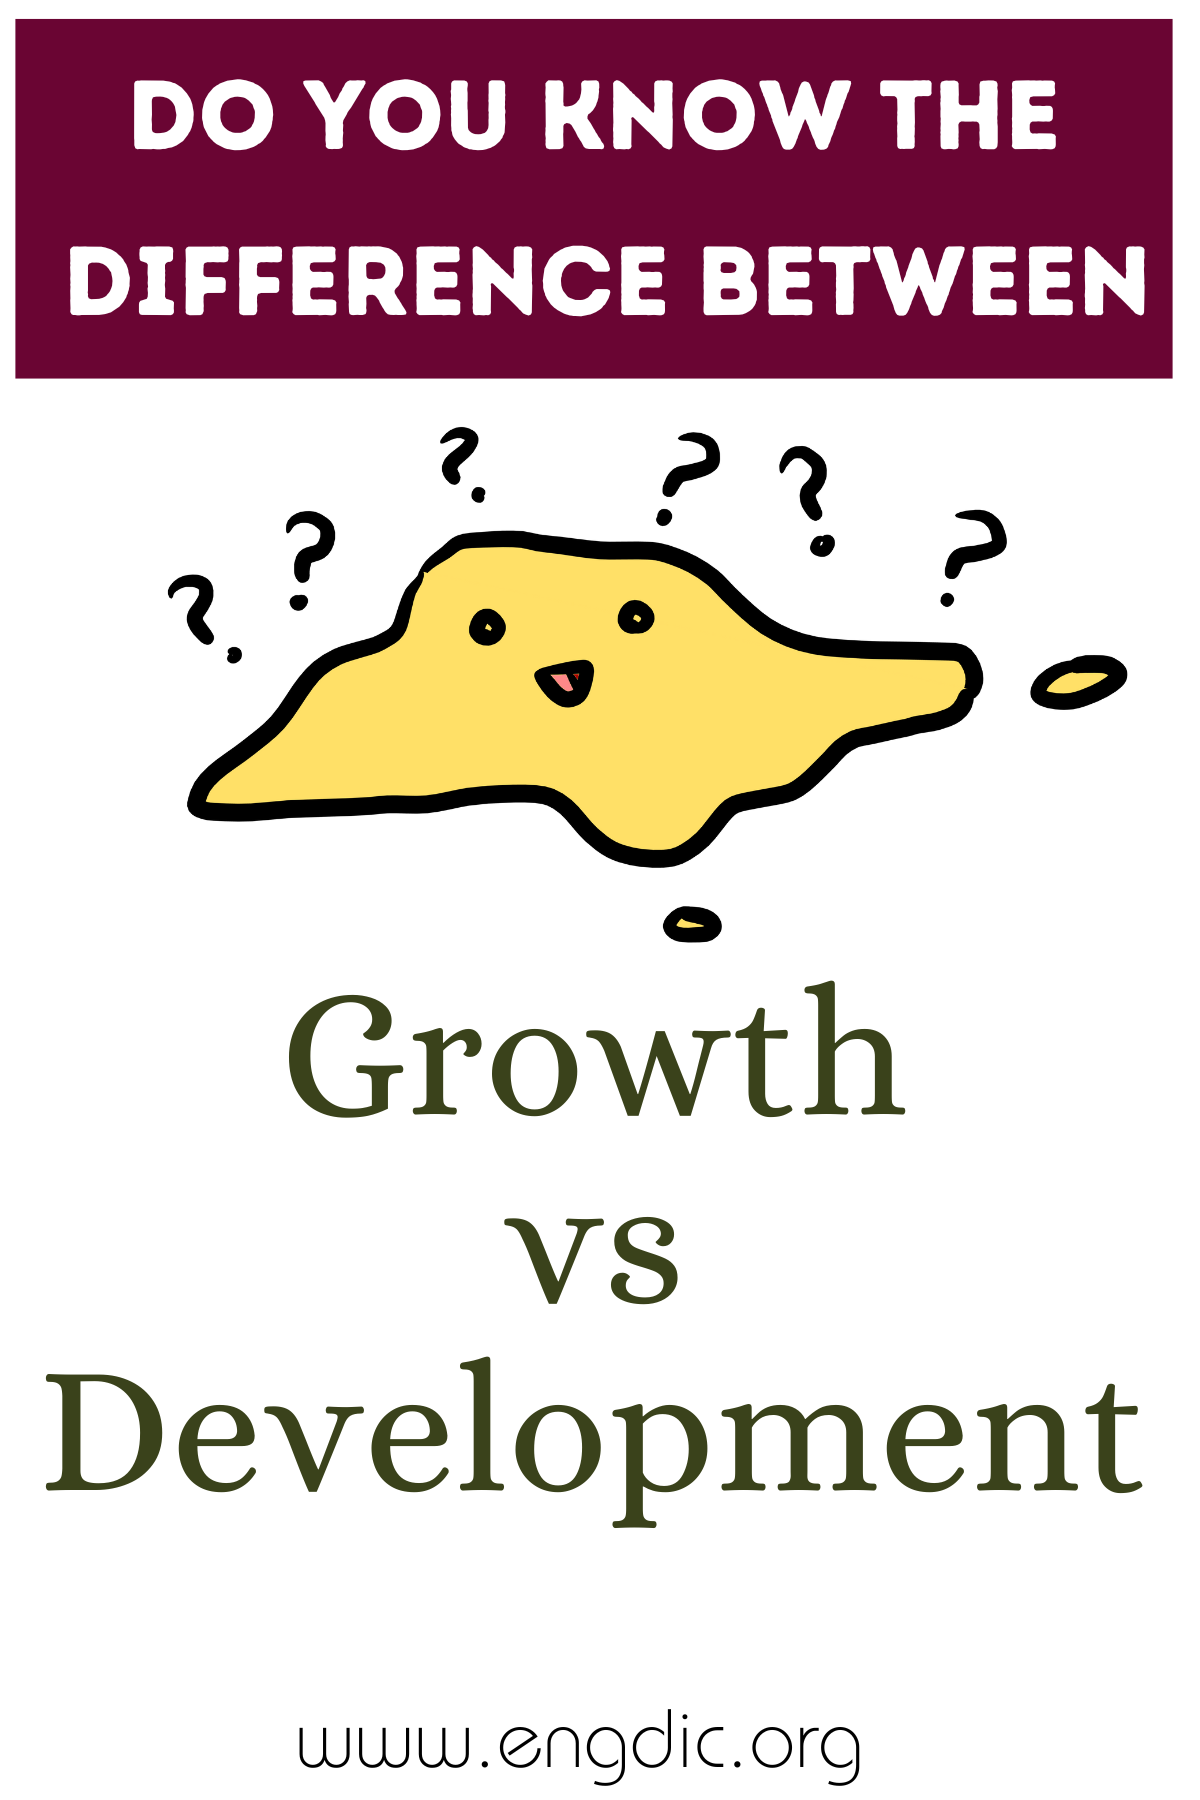 Growth vs Development